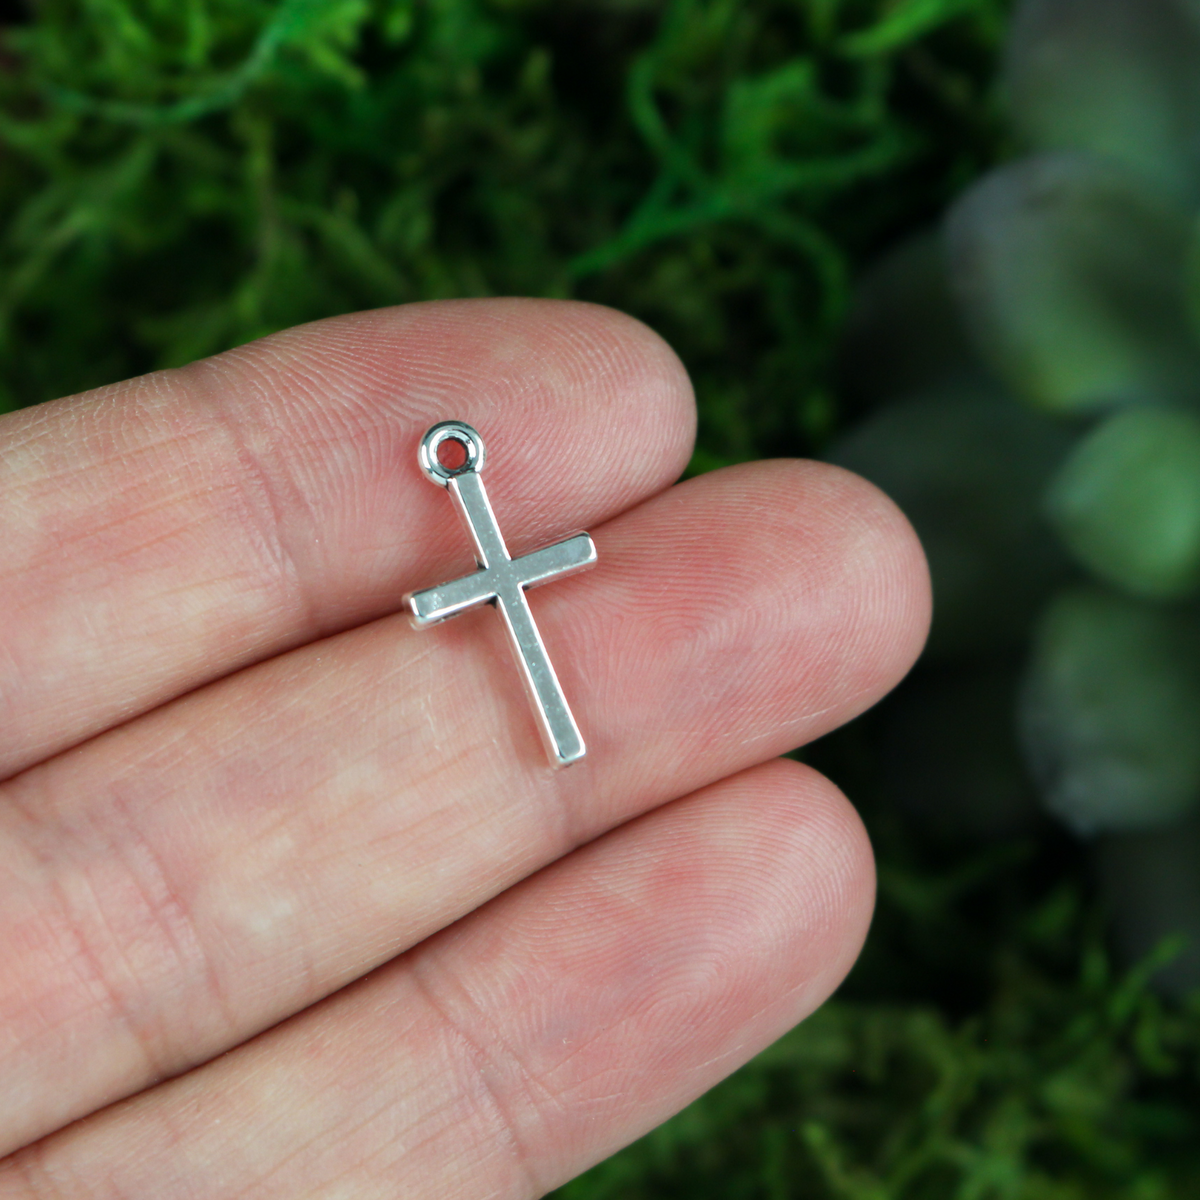 Tiny Bronze Cross Charms 17mm long, 25pcs – Small Devotions